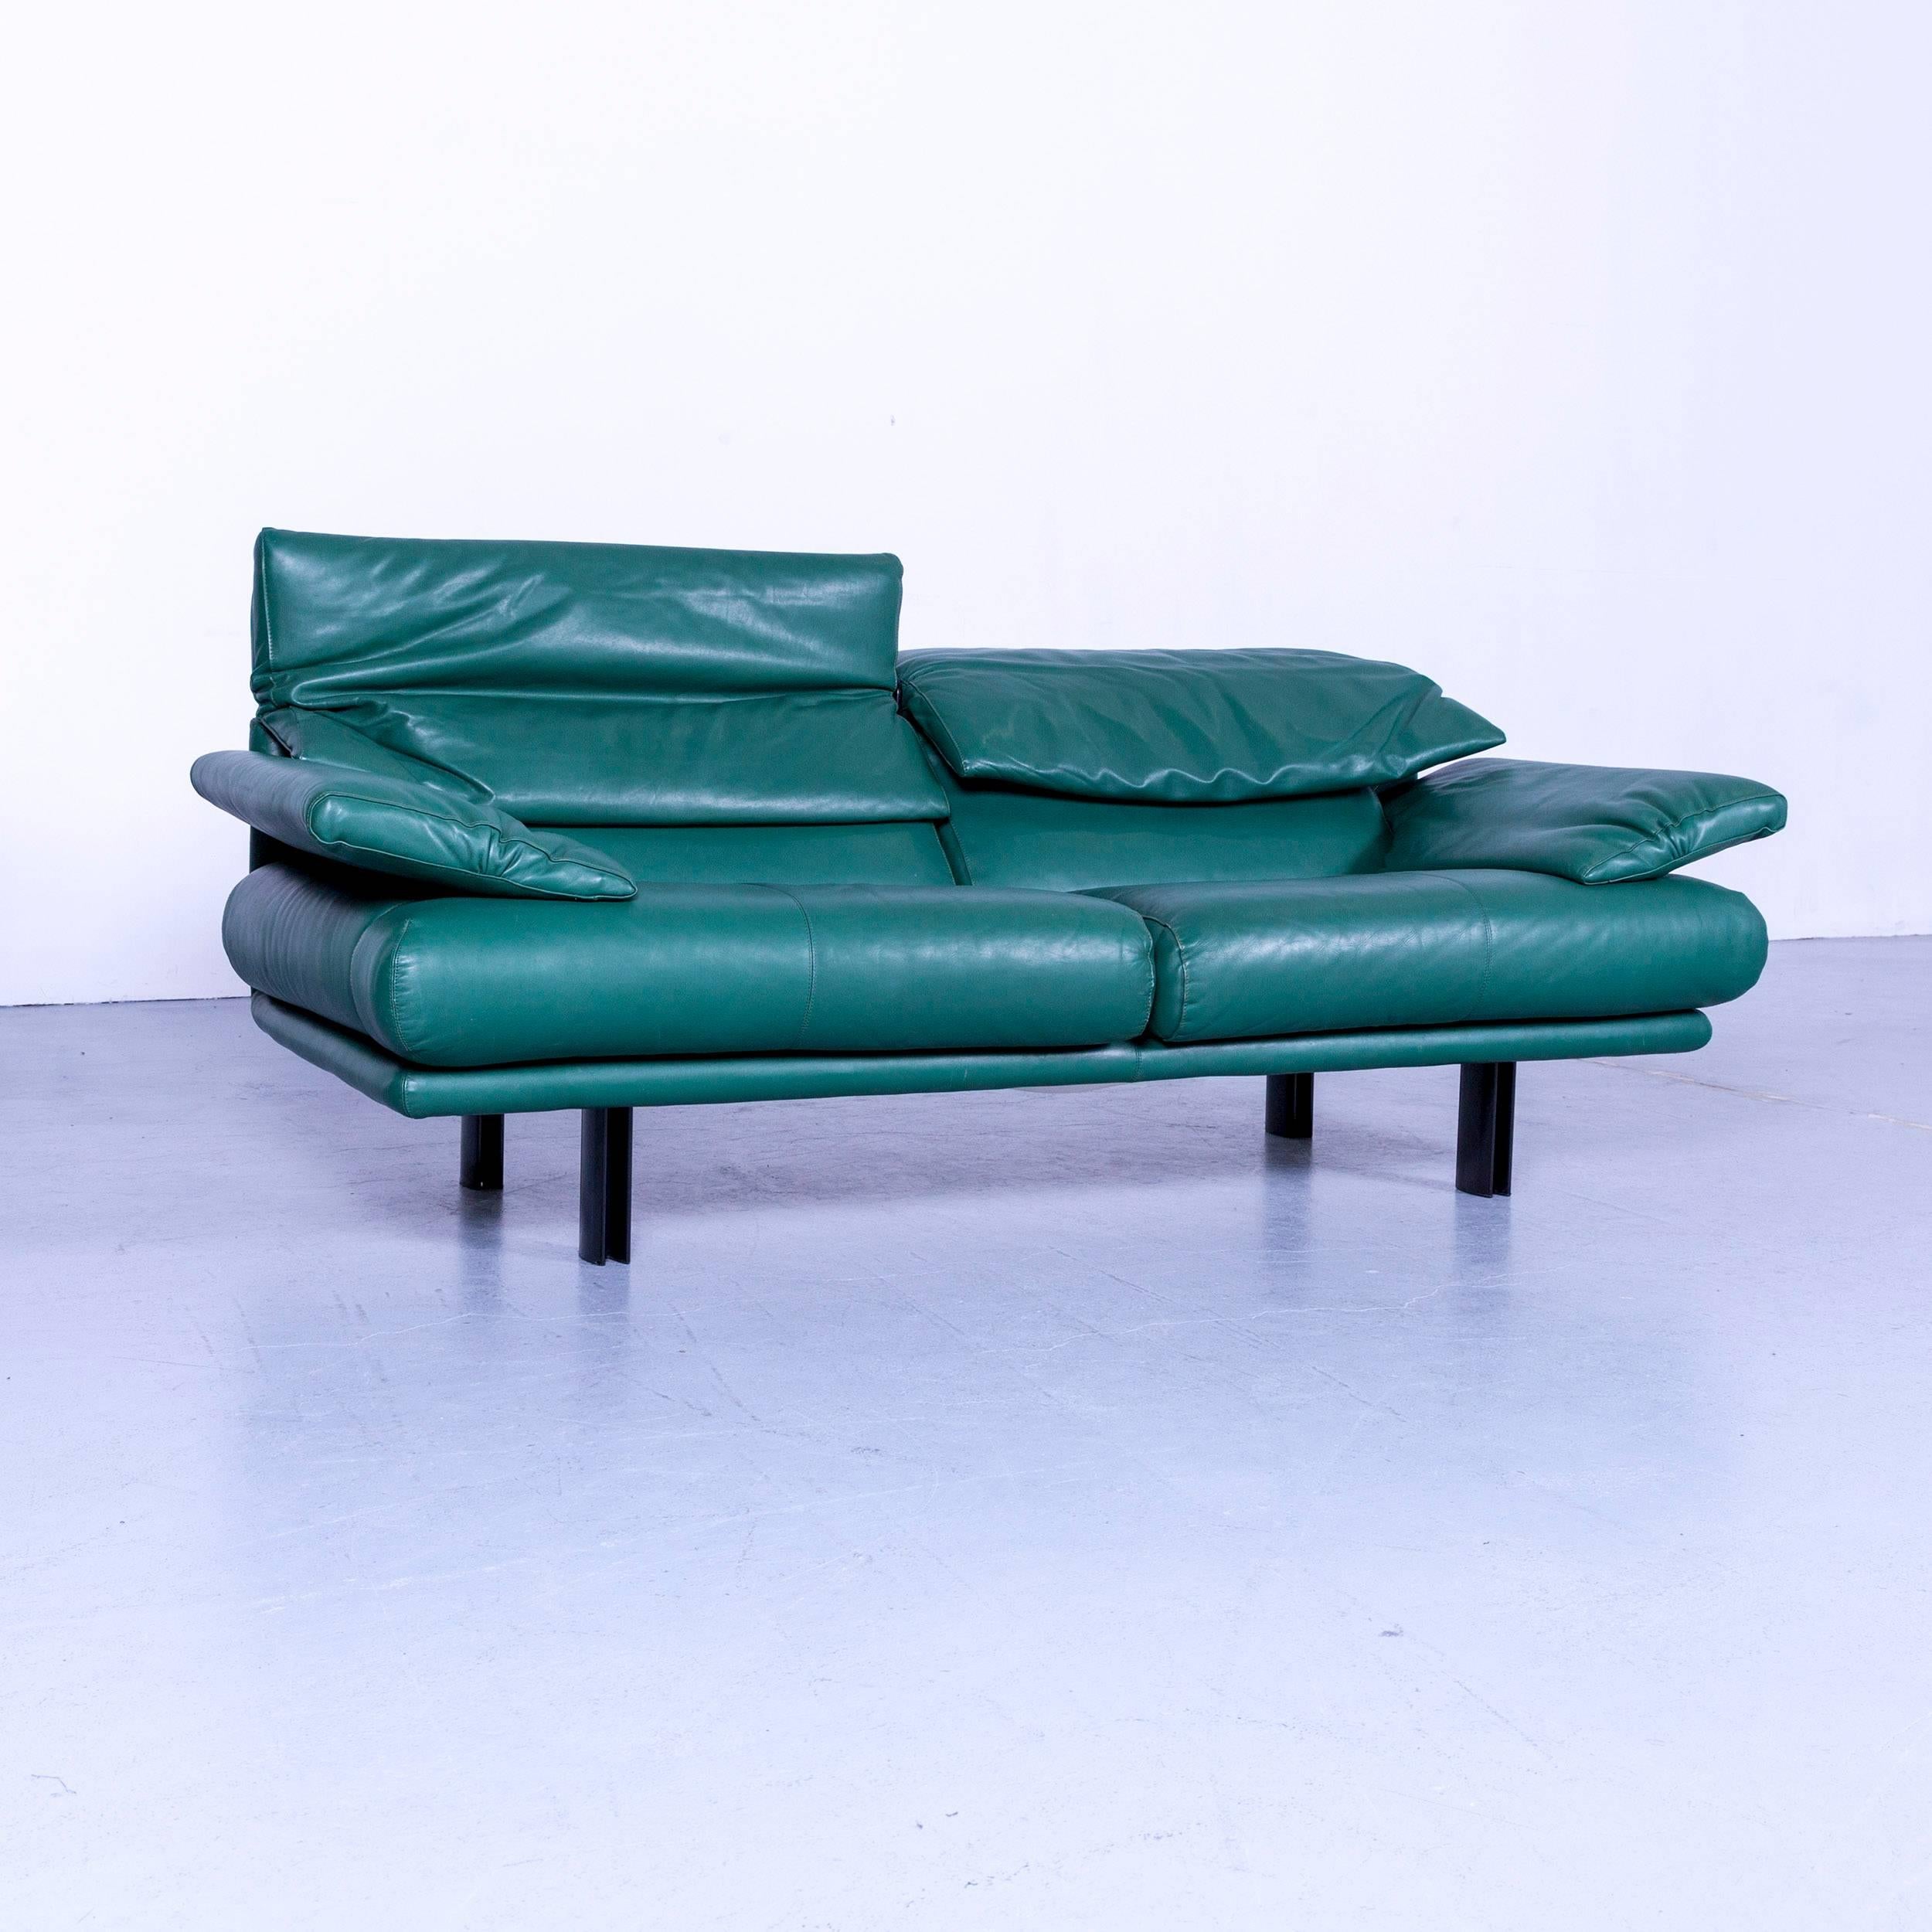 Zanotta Onda designer sofa blue leather modern with chrome frame, made in Italy.